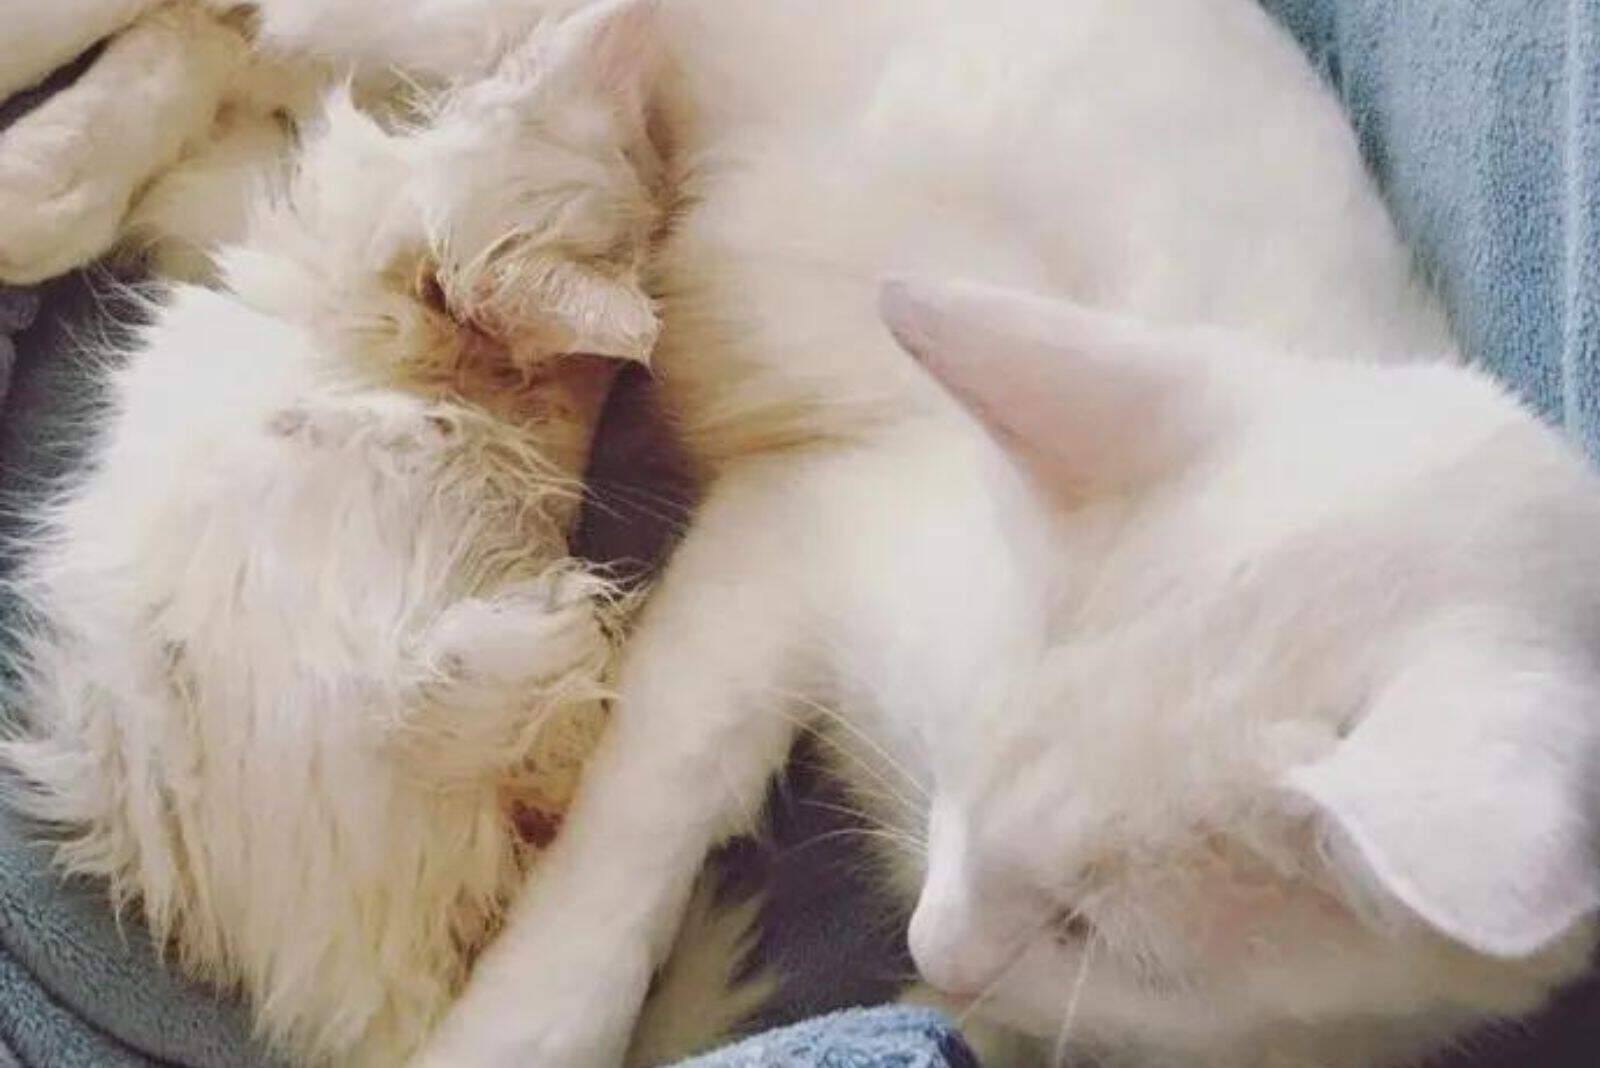 the white kitten breastfeeds the cat